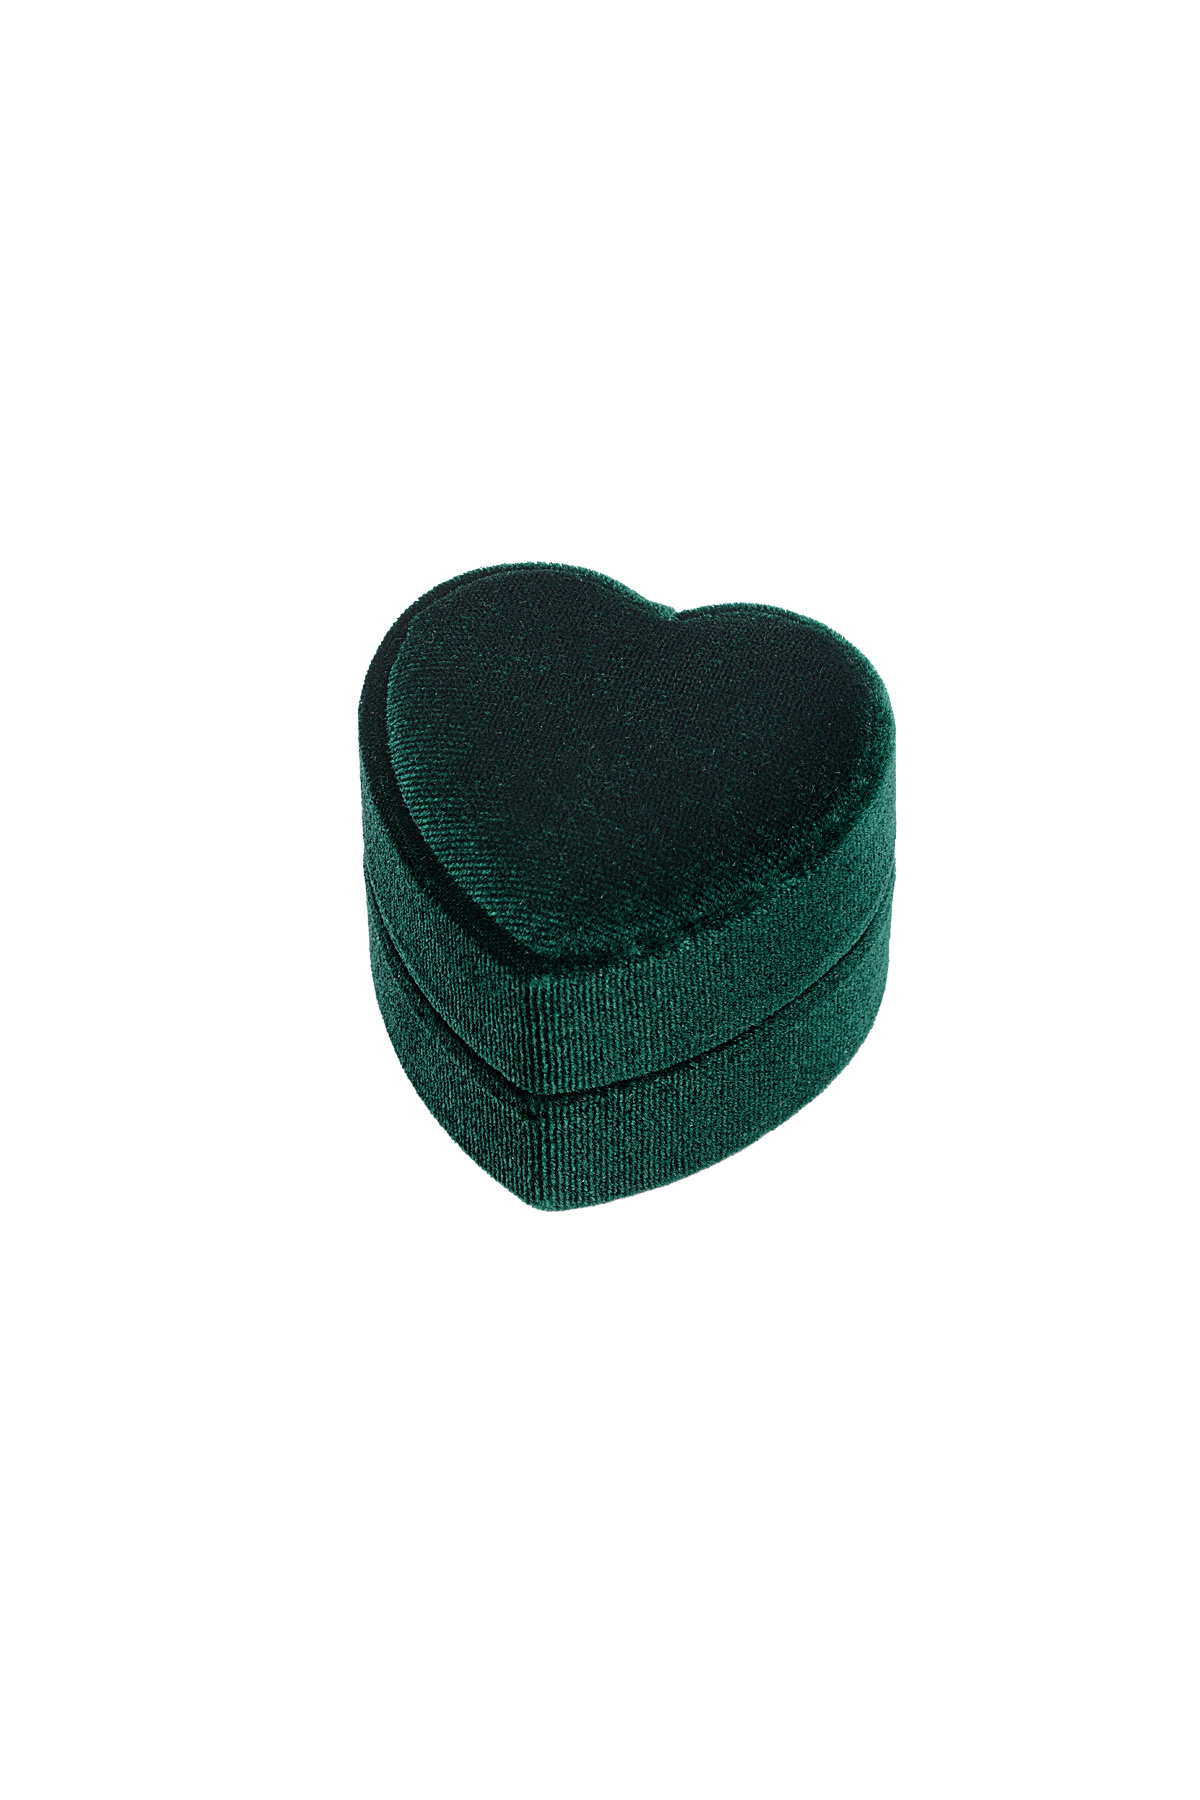 Jewelry box heart velvet - green h5 